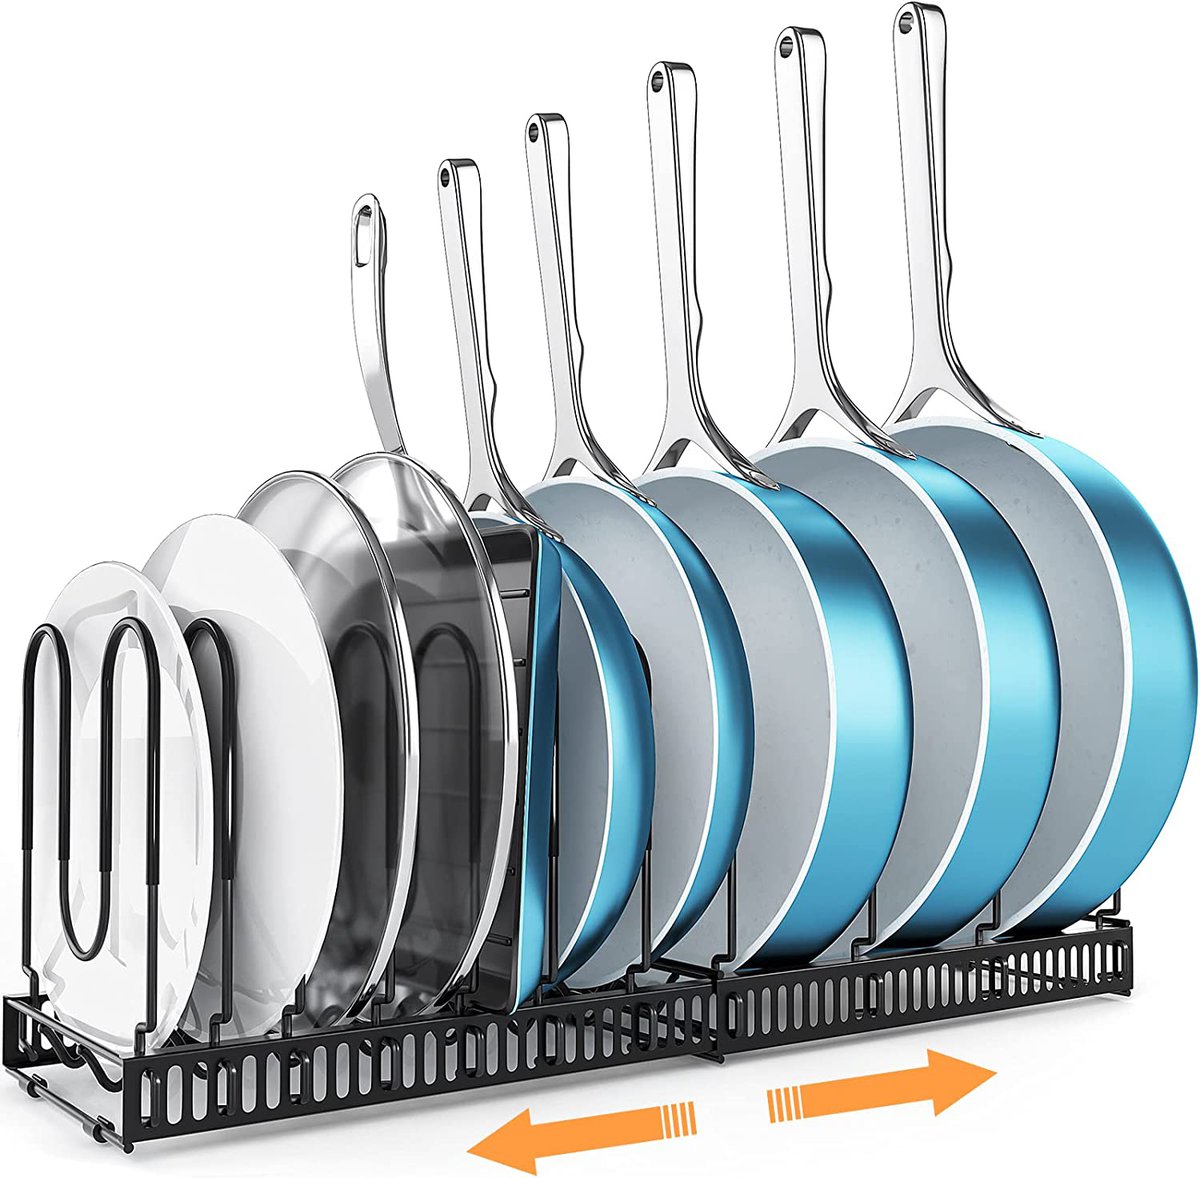 Kitchen organization ideas - An extendable horizontal rack that holds pots, pans, and lids.